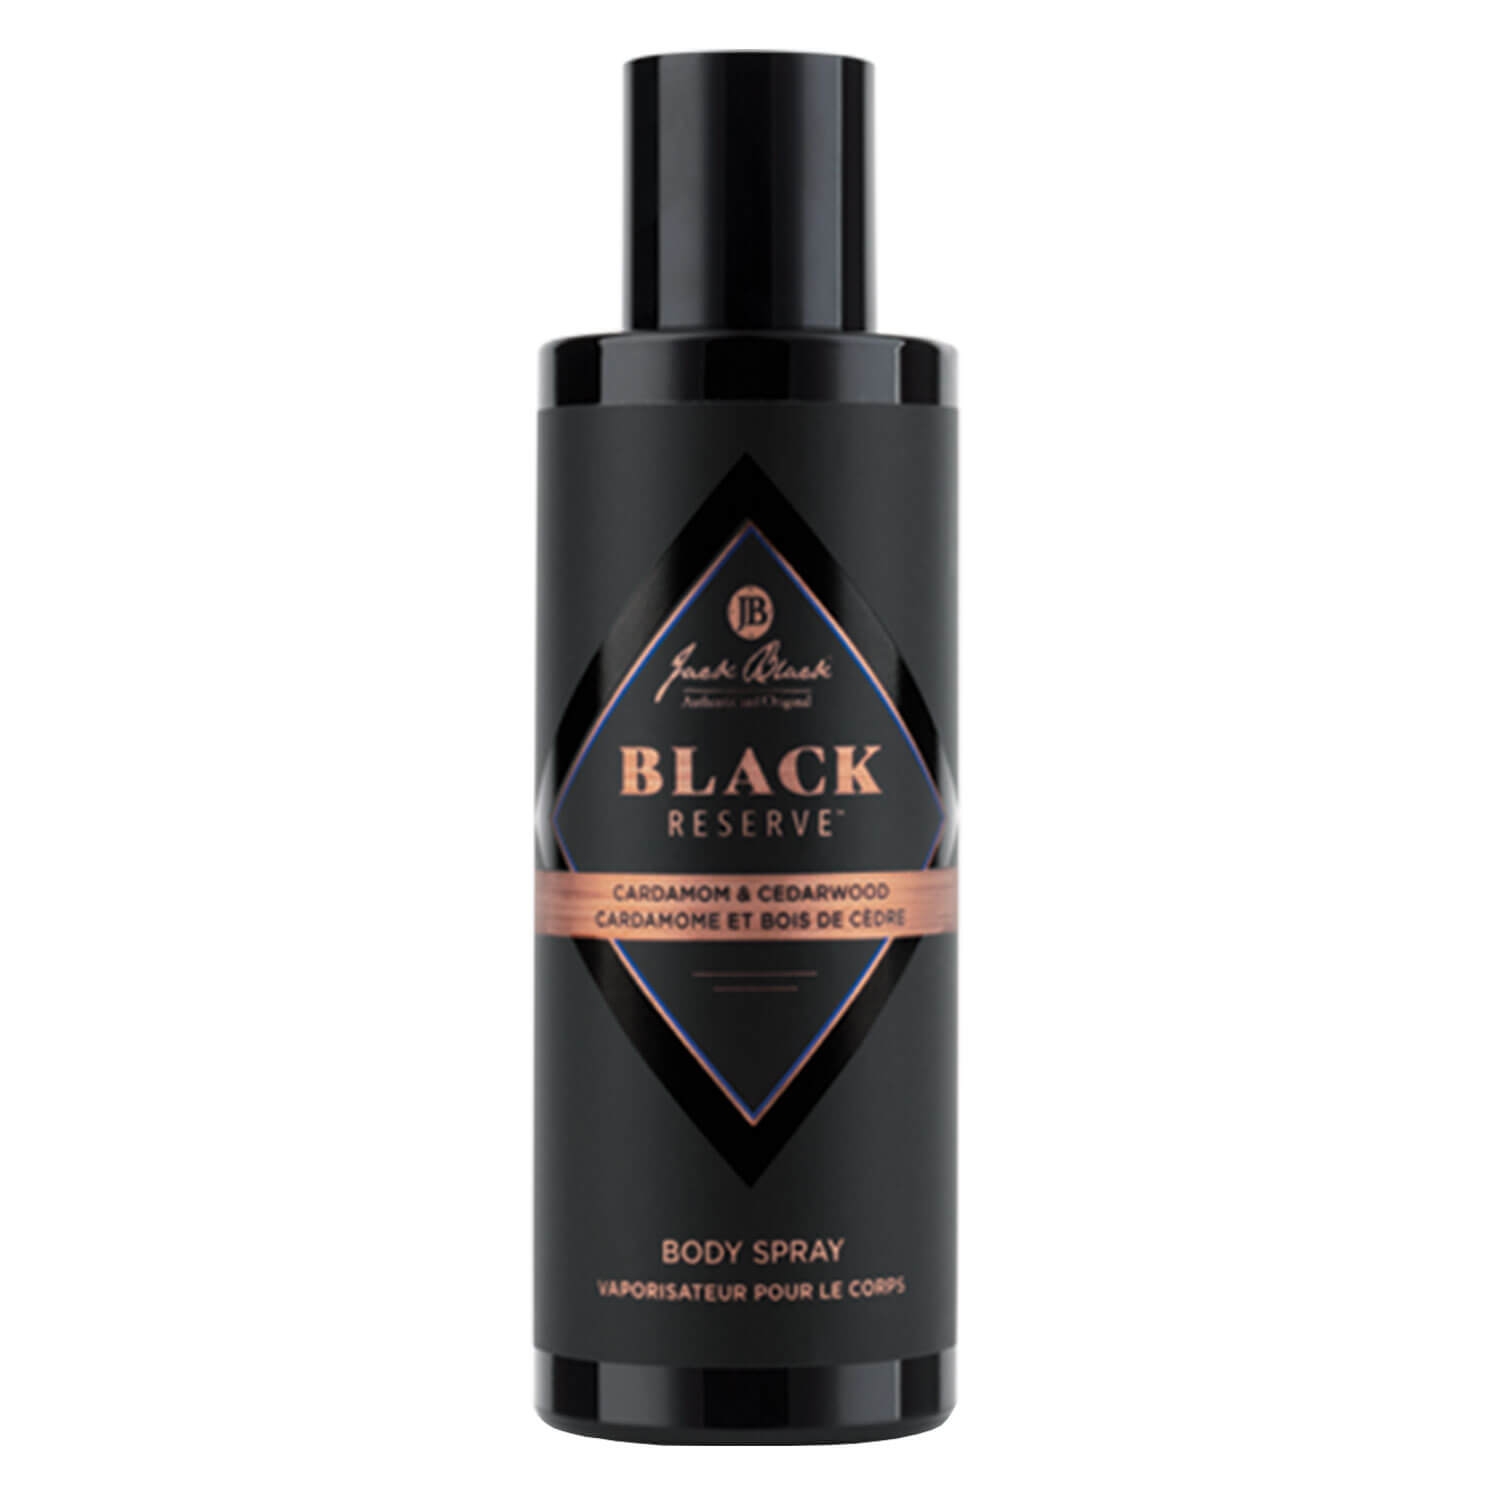 Produktbild von Black Reserve - Body Spray